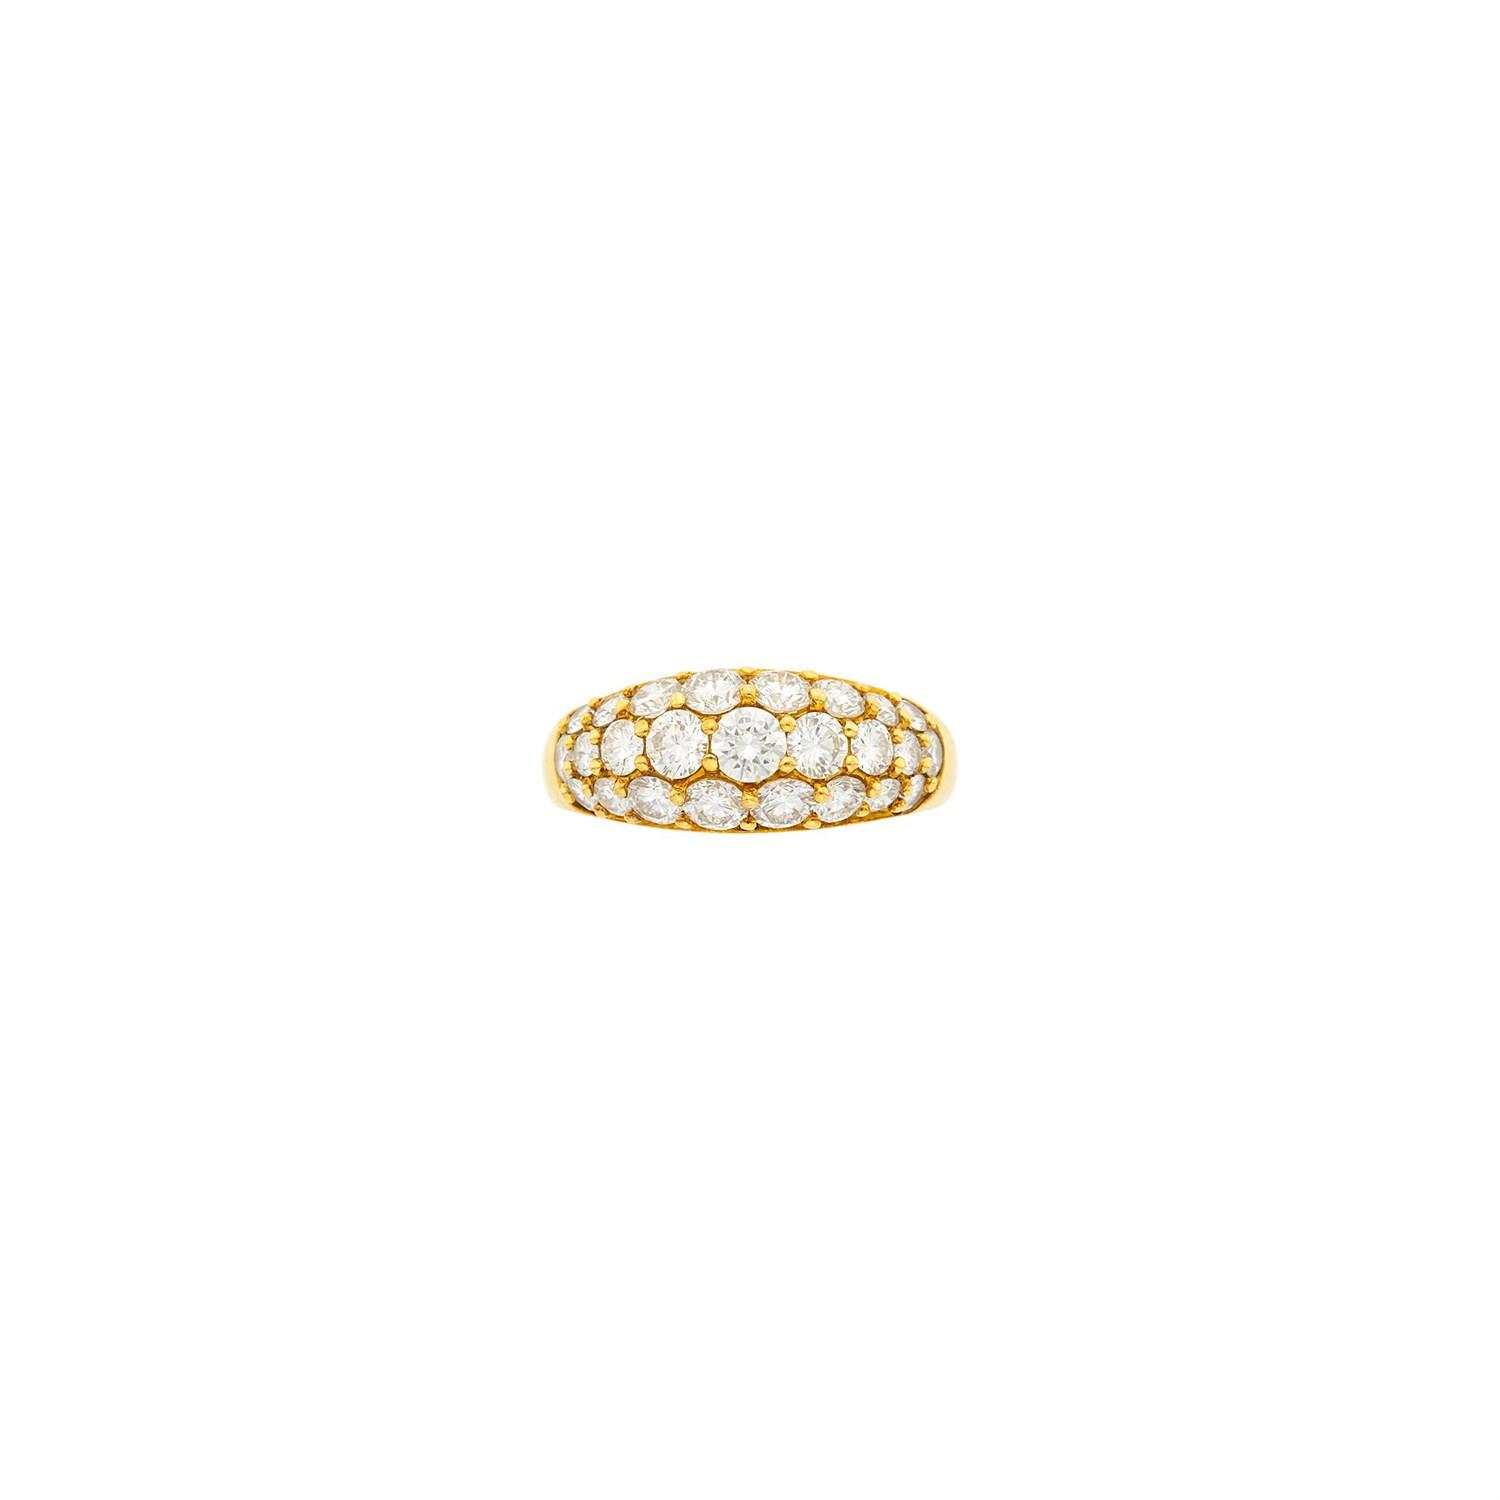 Lot 163 - Tiffany & Co. Gold and Diamond Ring